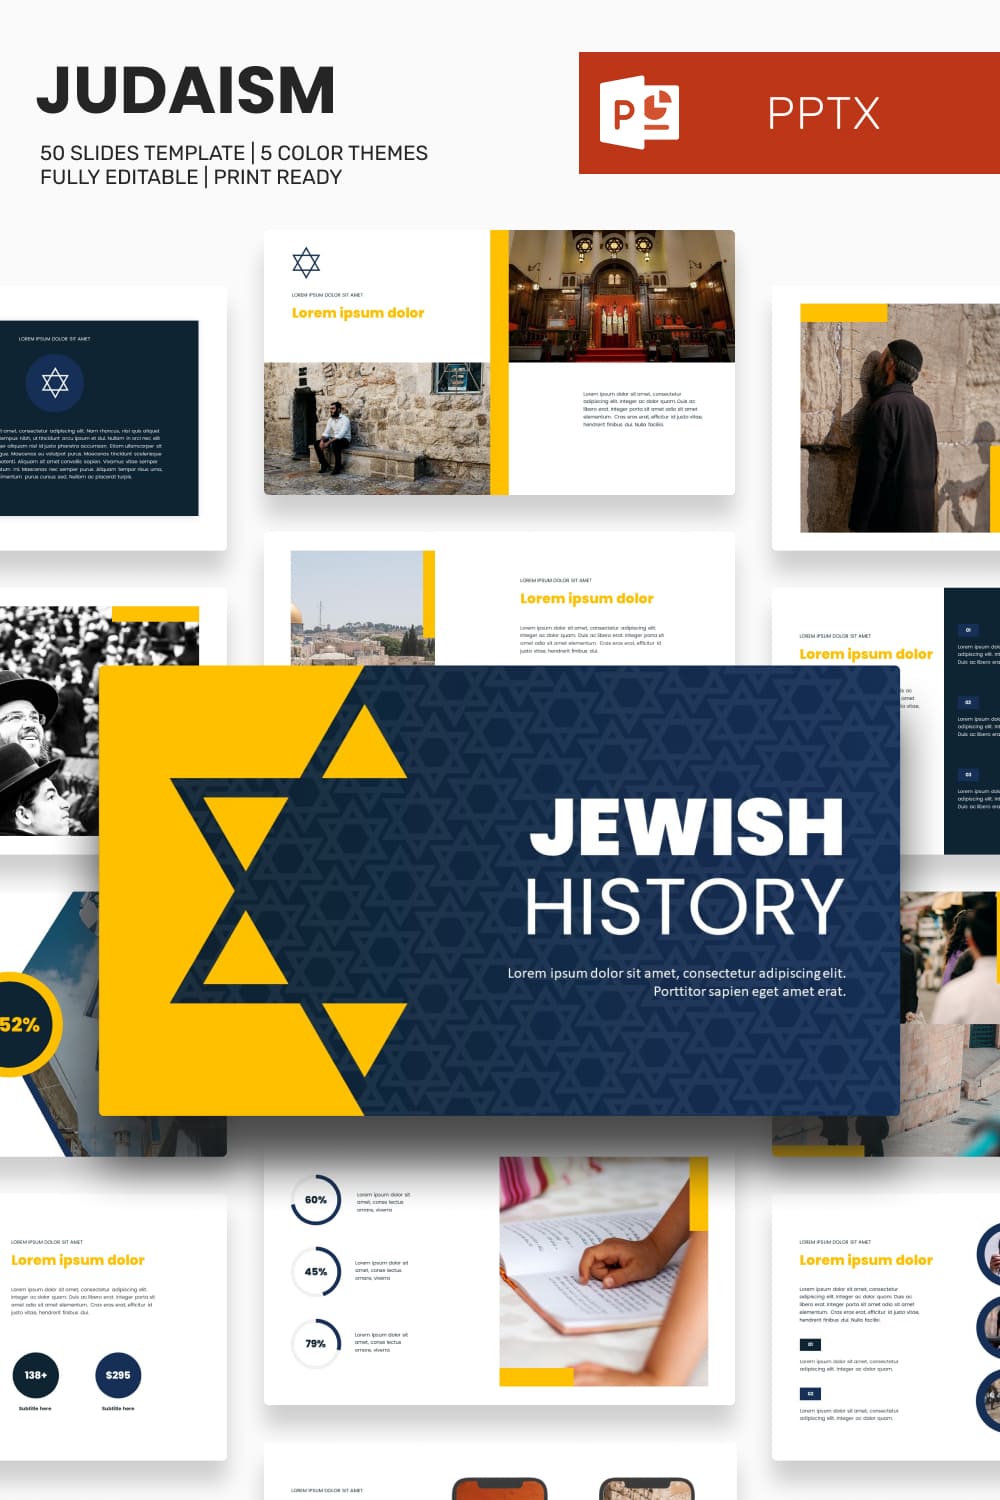 Judaism Presentation PowerPoint template.